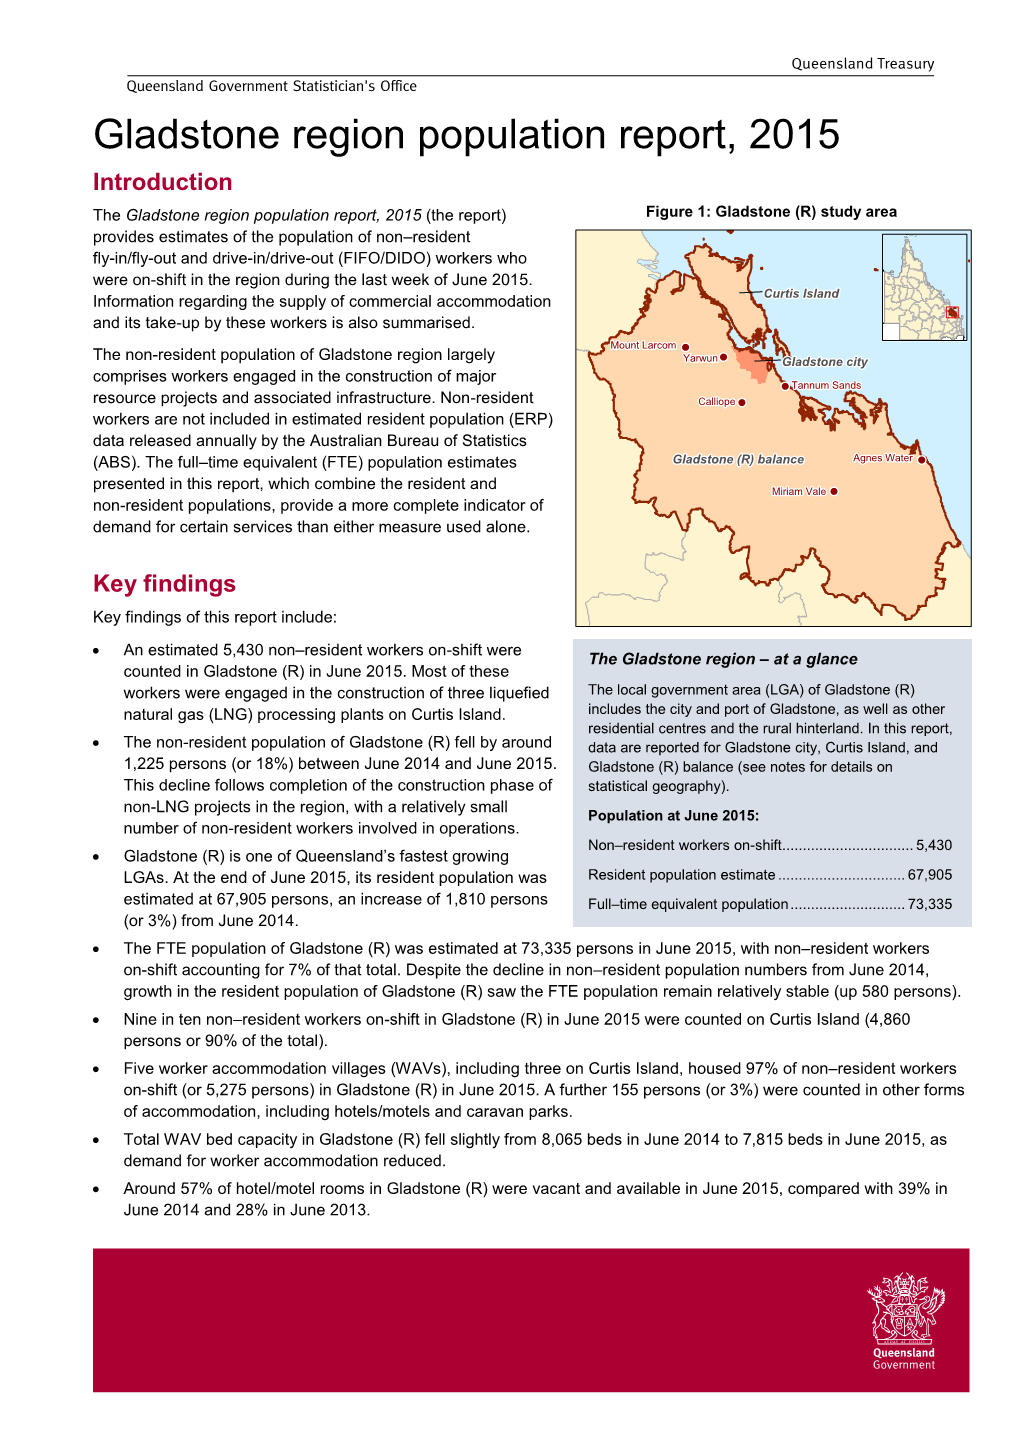 Gladstone Region Population Report, 2015